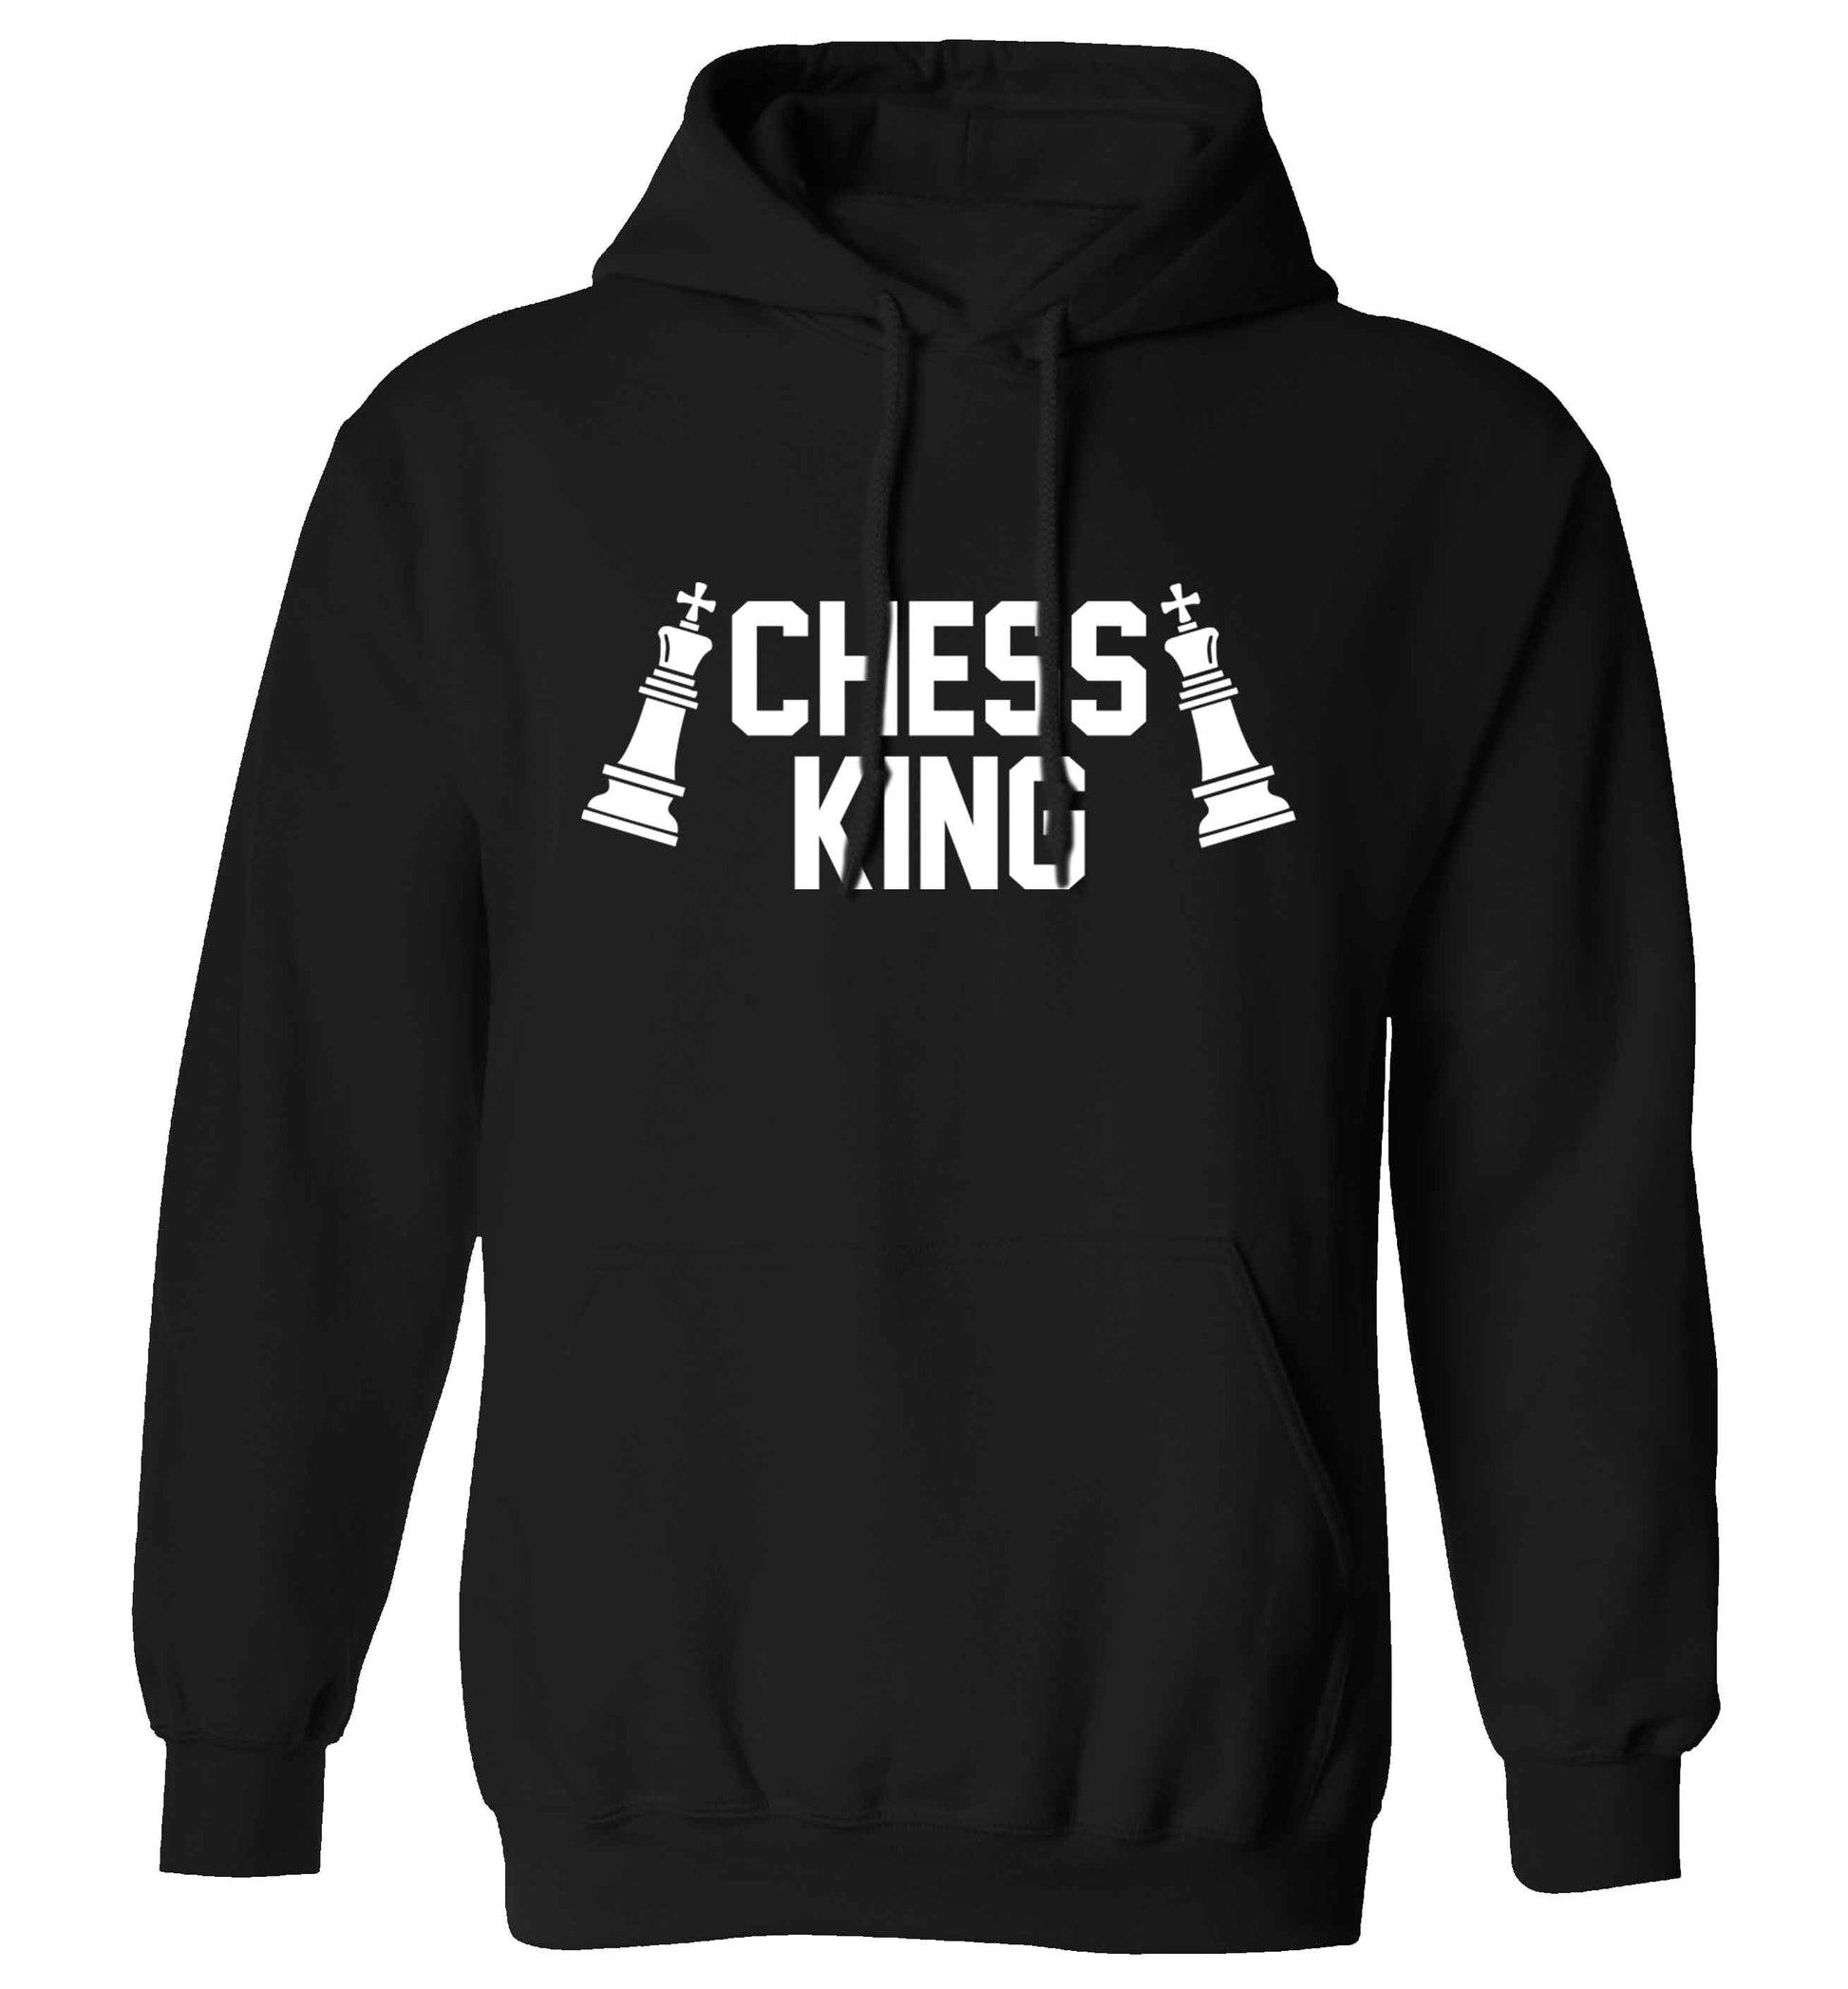 Chess king adults unisex black hoodie 2XL